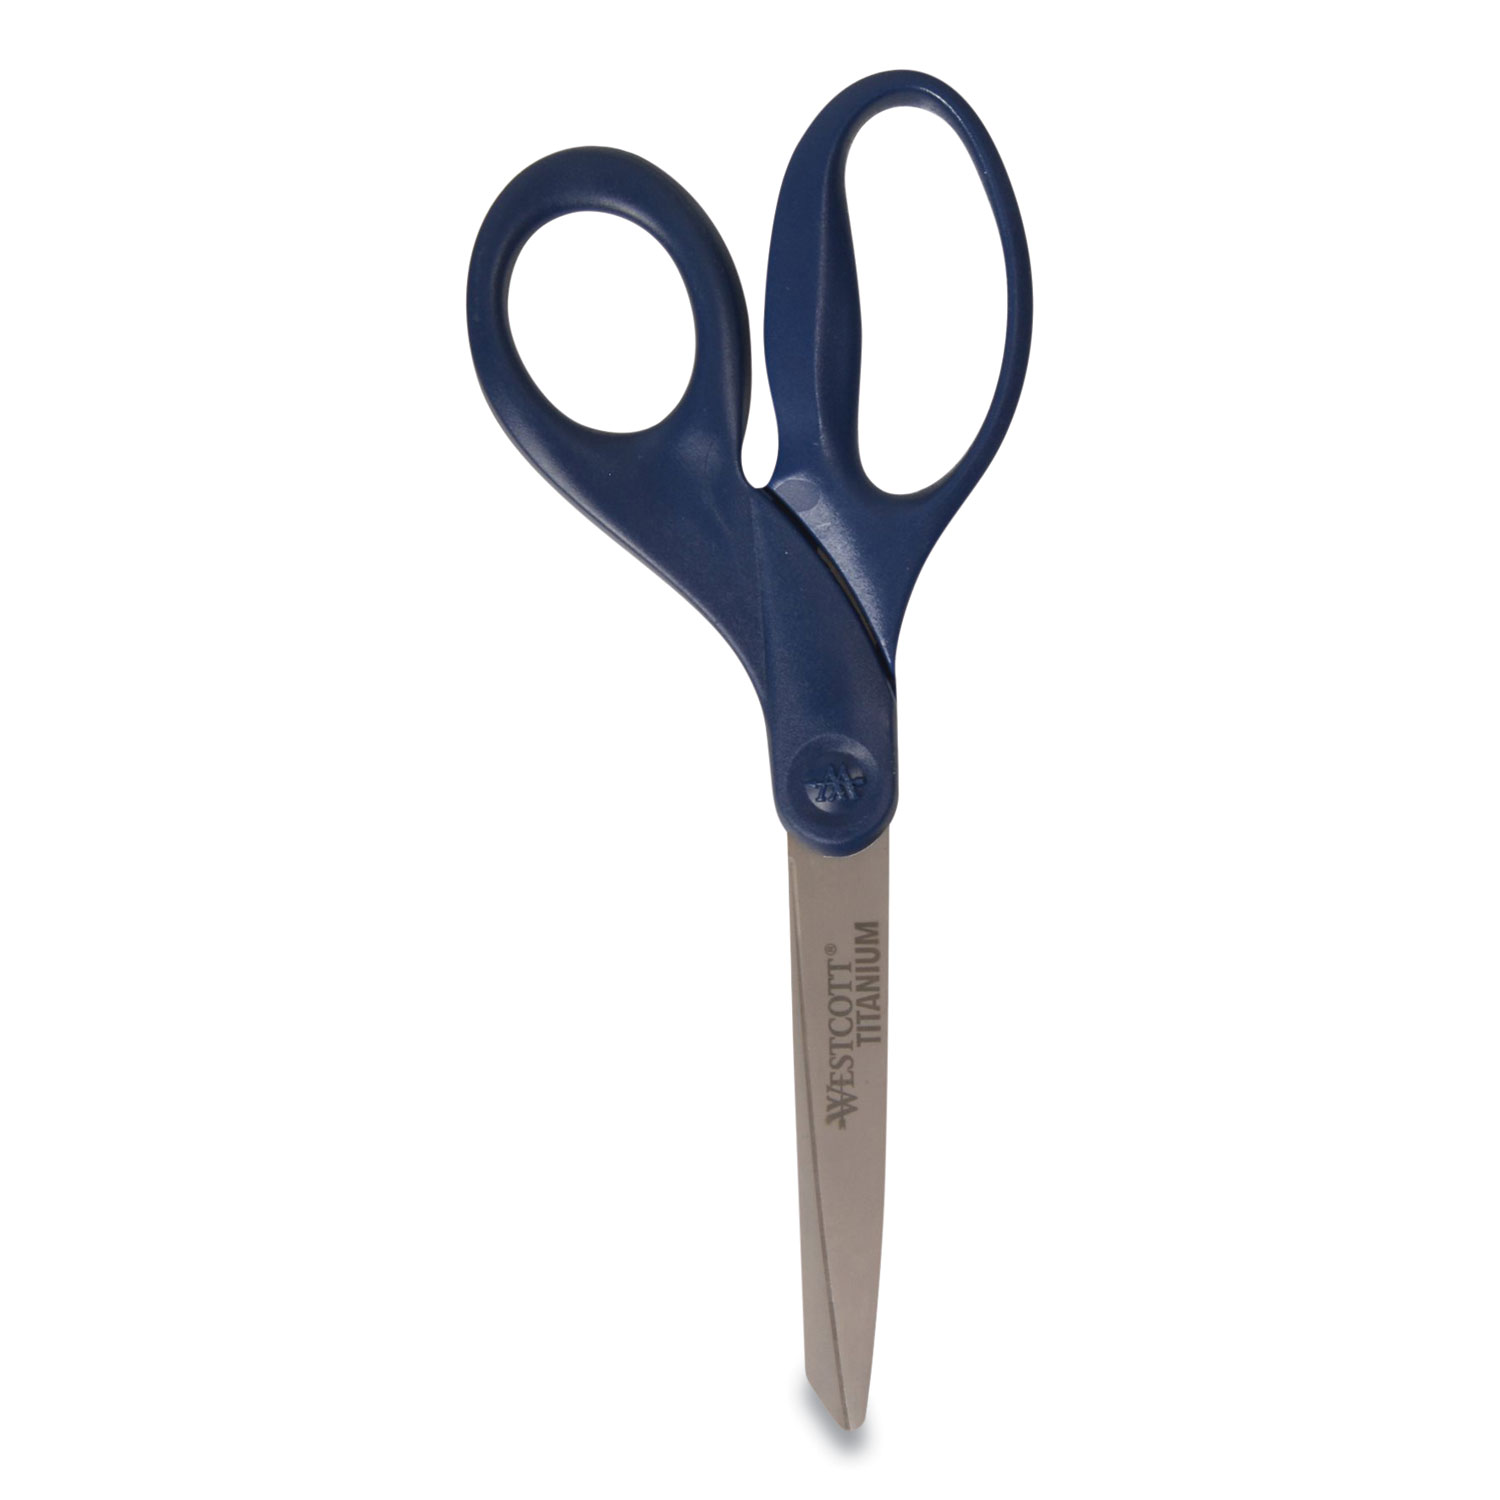  Westcott 17509 Titanium Bonded Scissors, 8 Long, 3.5 Cut Length, Navy Straight Handle (ACM24392195) 